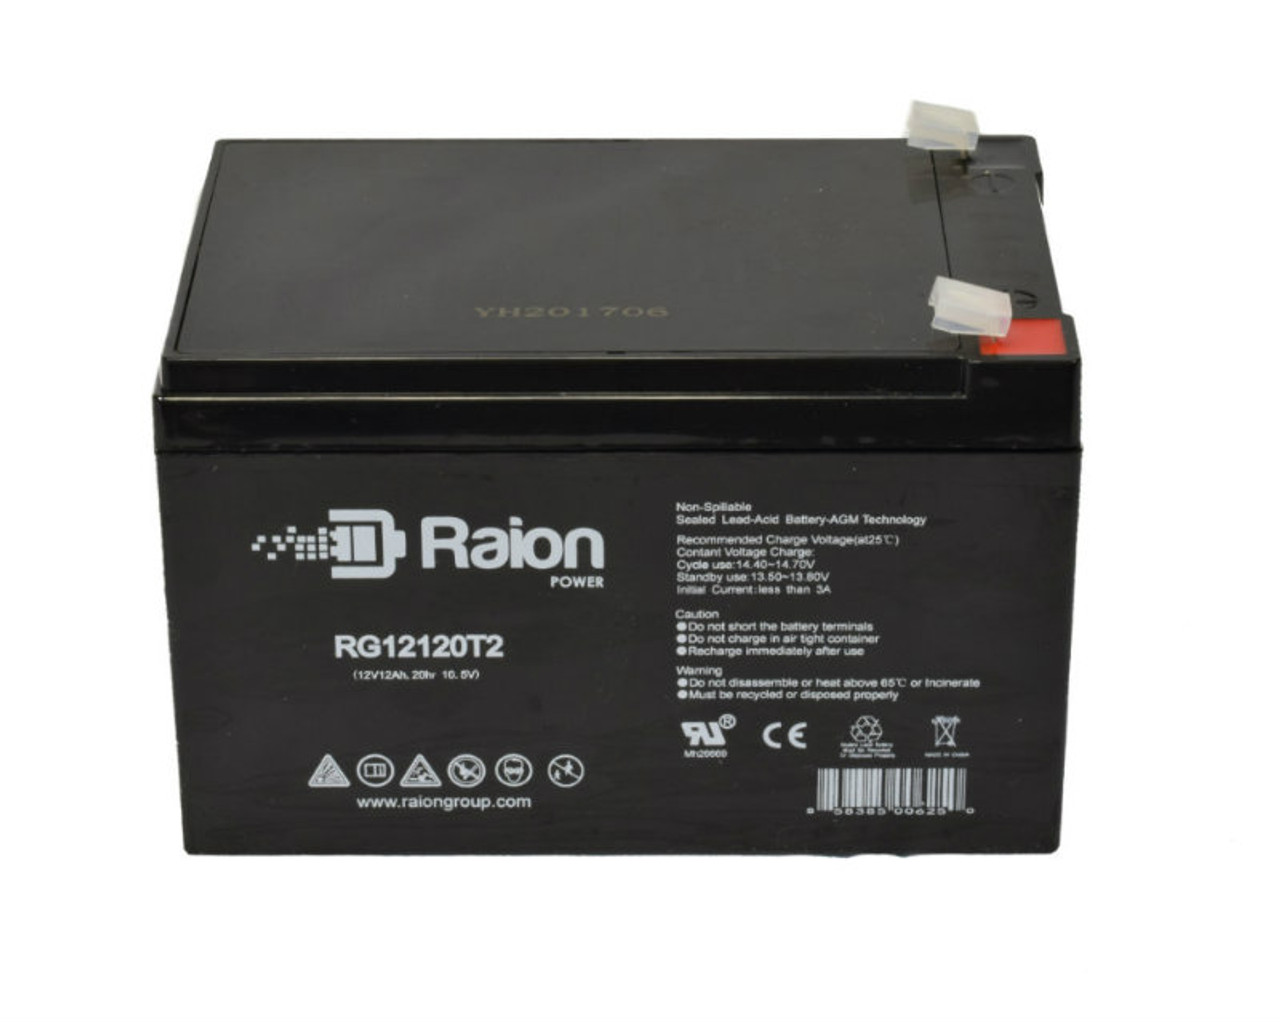 Raion Power RG12120T2 SLA Battery for Chiway SJ12V14Ah